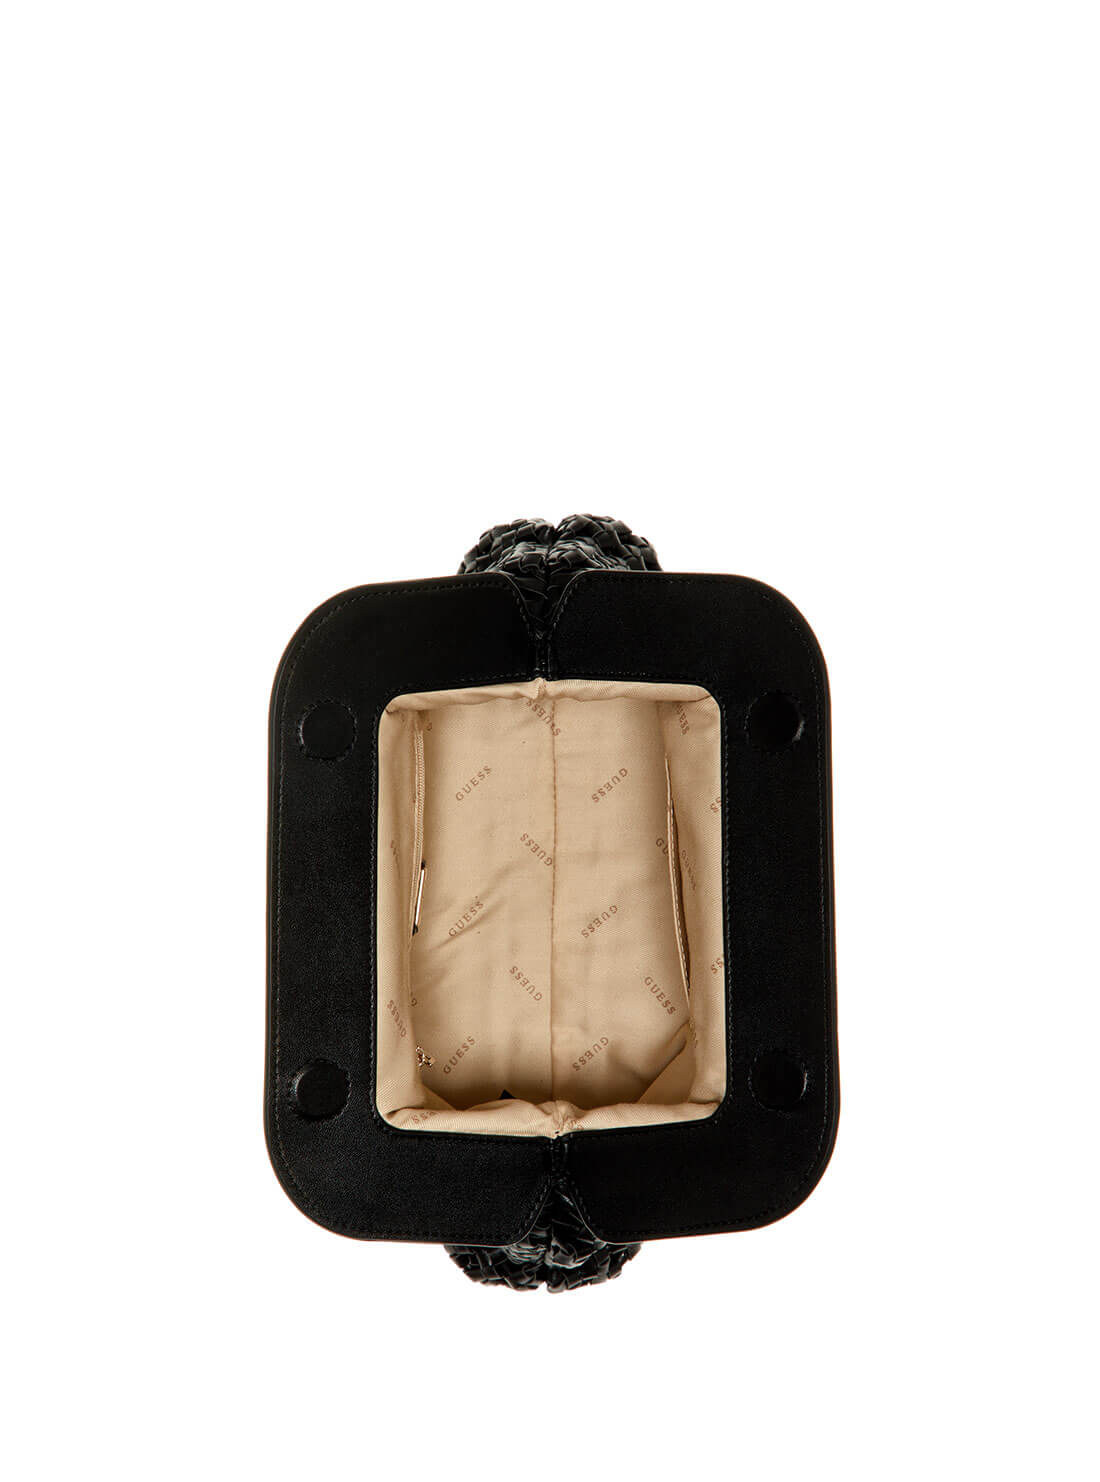 GUESS Womens Black Sicilia Frame Clutch Crossbody Bag WG849017 Inside View